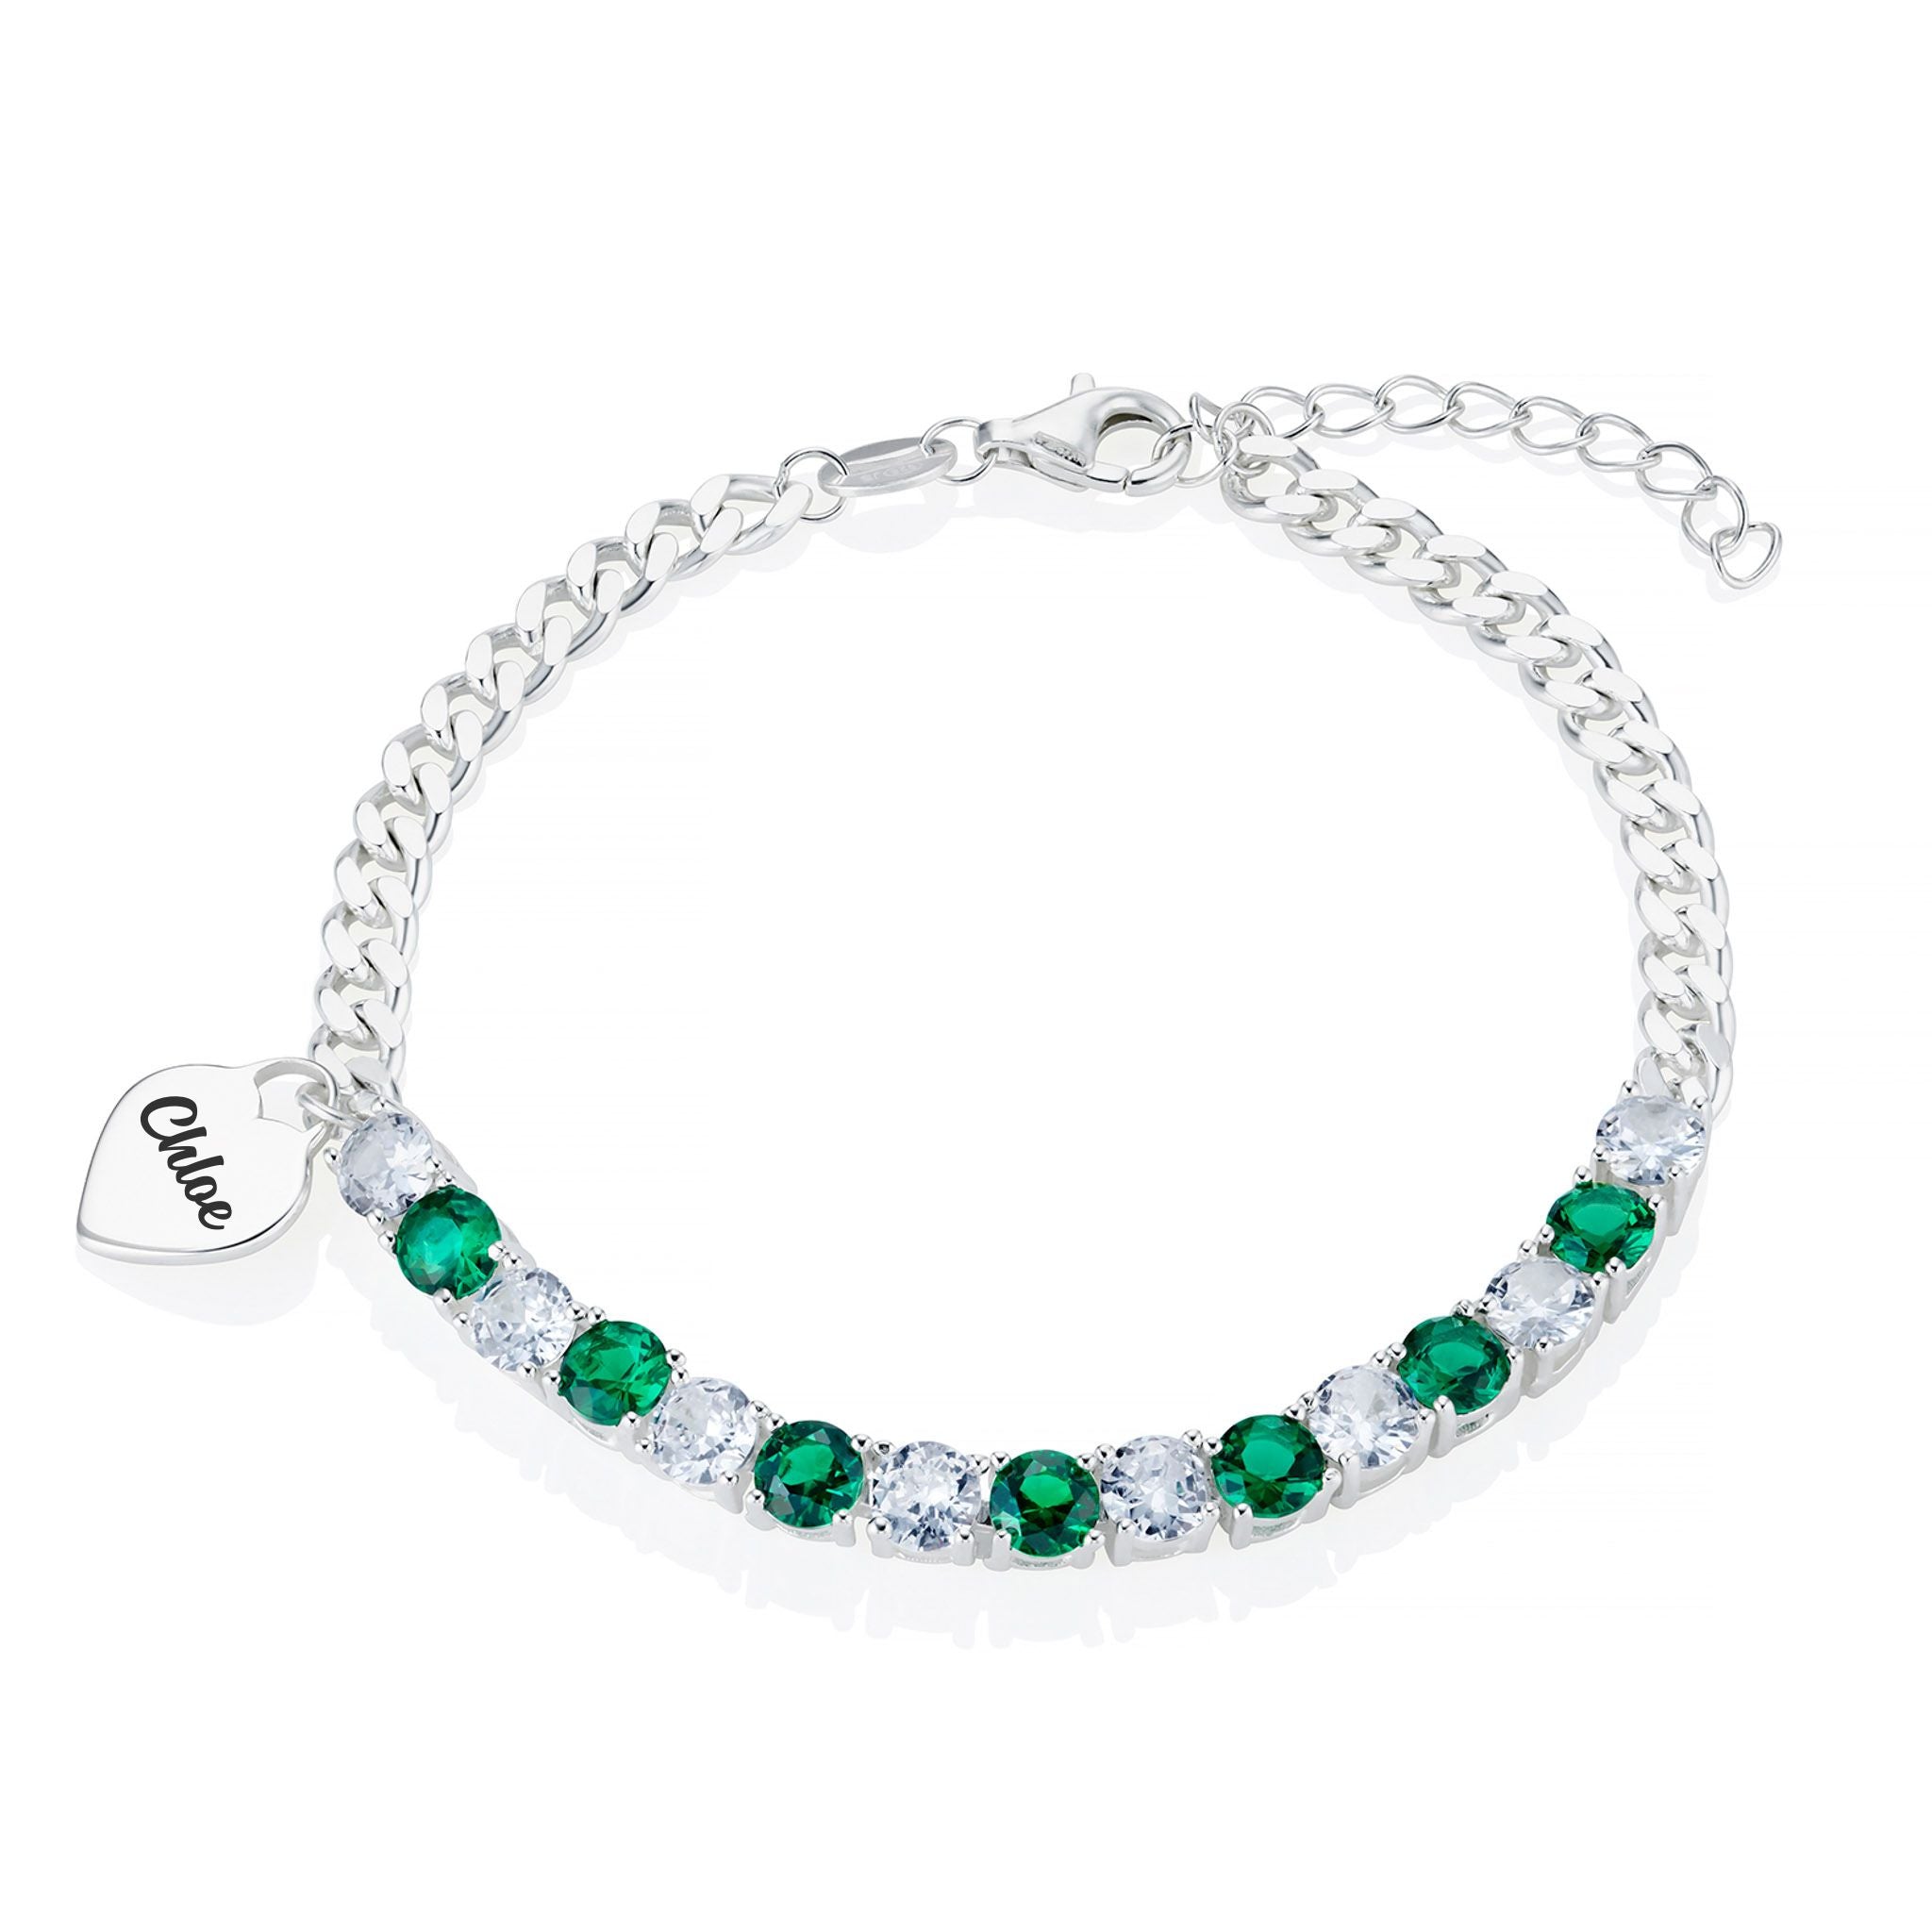 Sterling Silver Engraved Heart Charm Tennis Bracelet with Gemstones